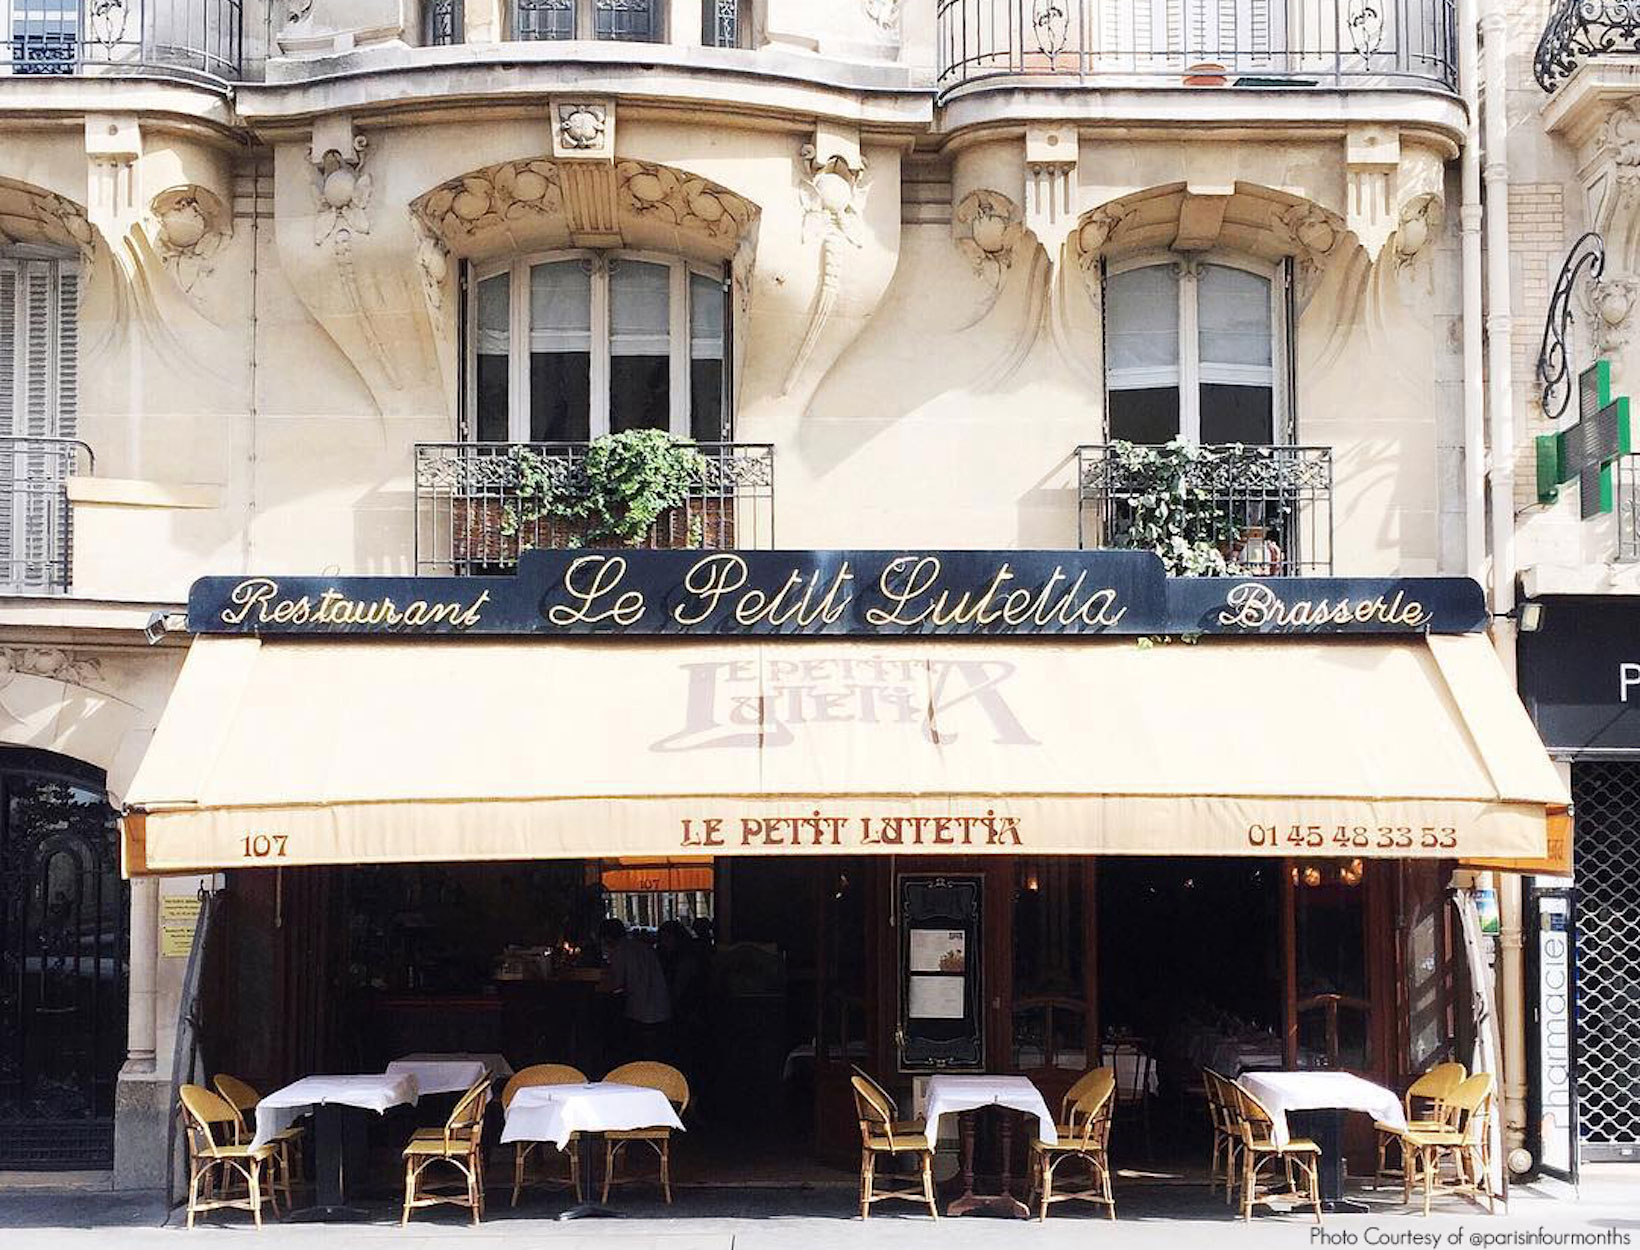 Visit the Louis Vuitton Cafe in Paris, Video published by celesta